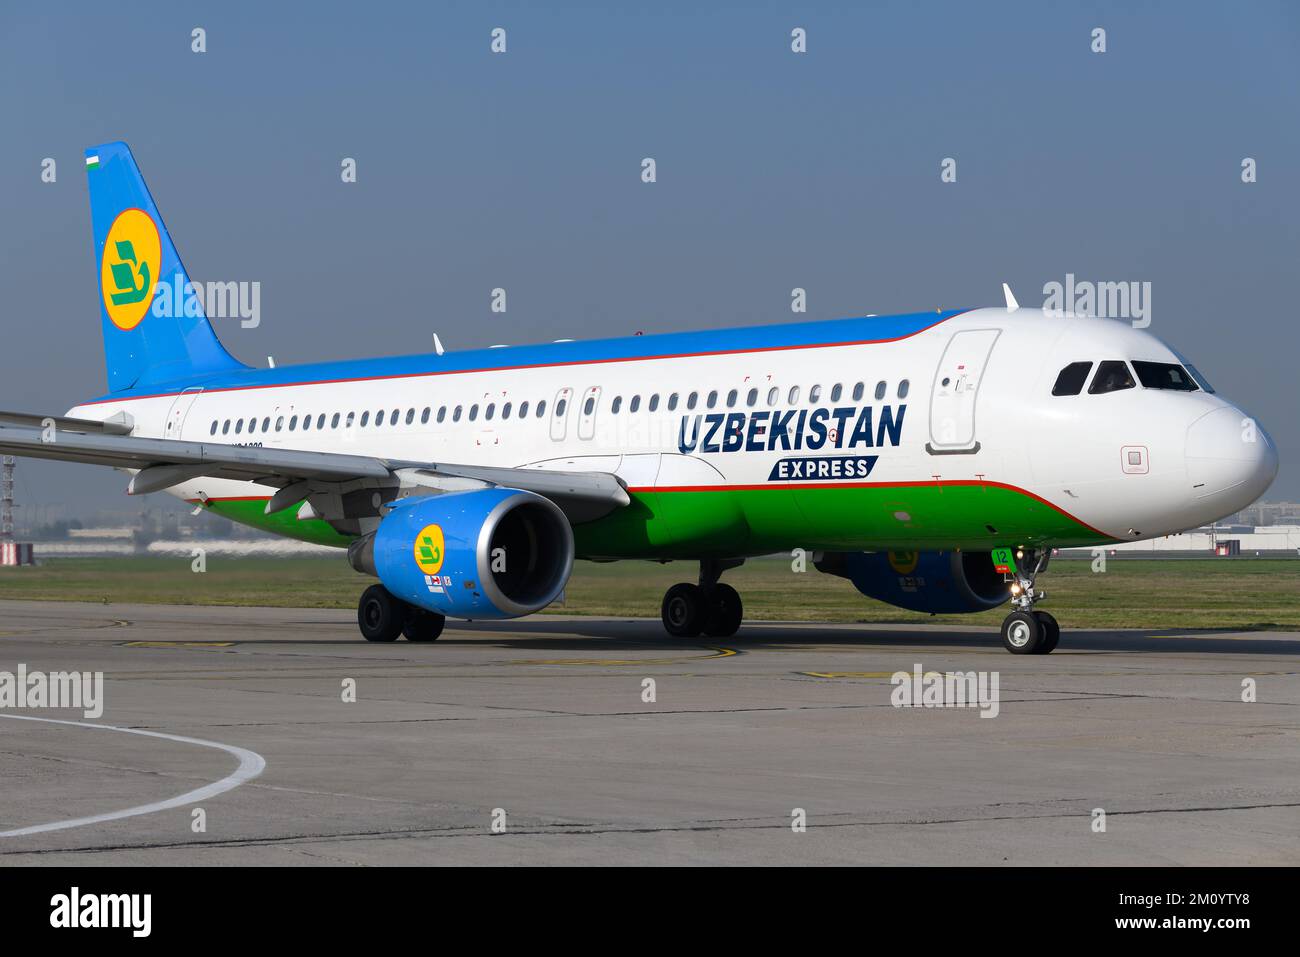 Uzbekistan Airways Express Airbus A320 airplane taxiing at Tashkent Airport in Uzbekistan. Aircraft of Uzbekistan Express. Plane registered as UK32012 Stock Photo